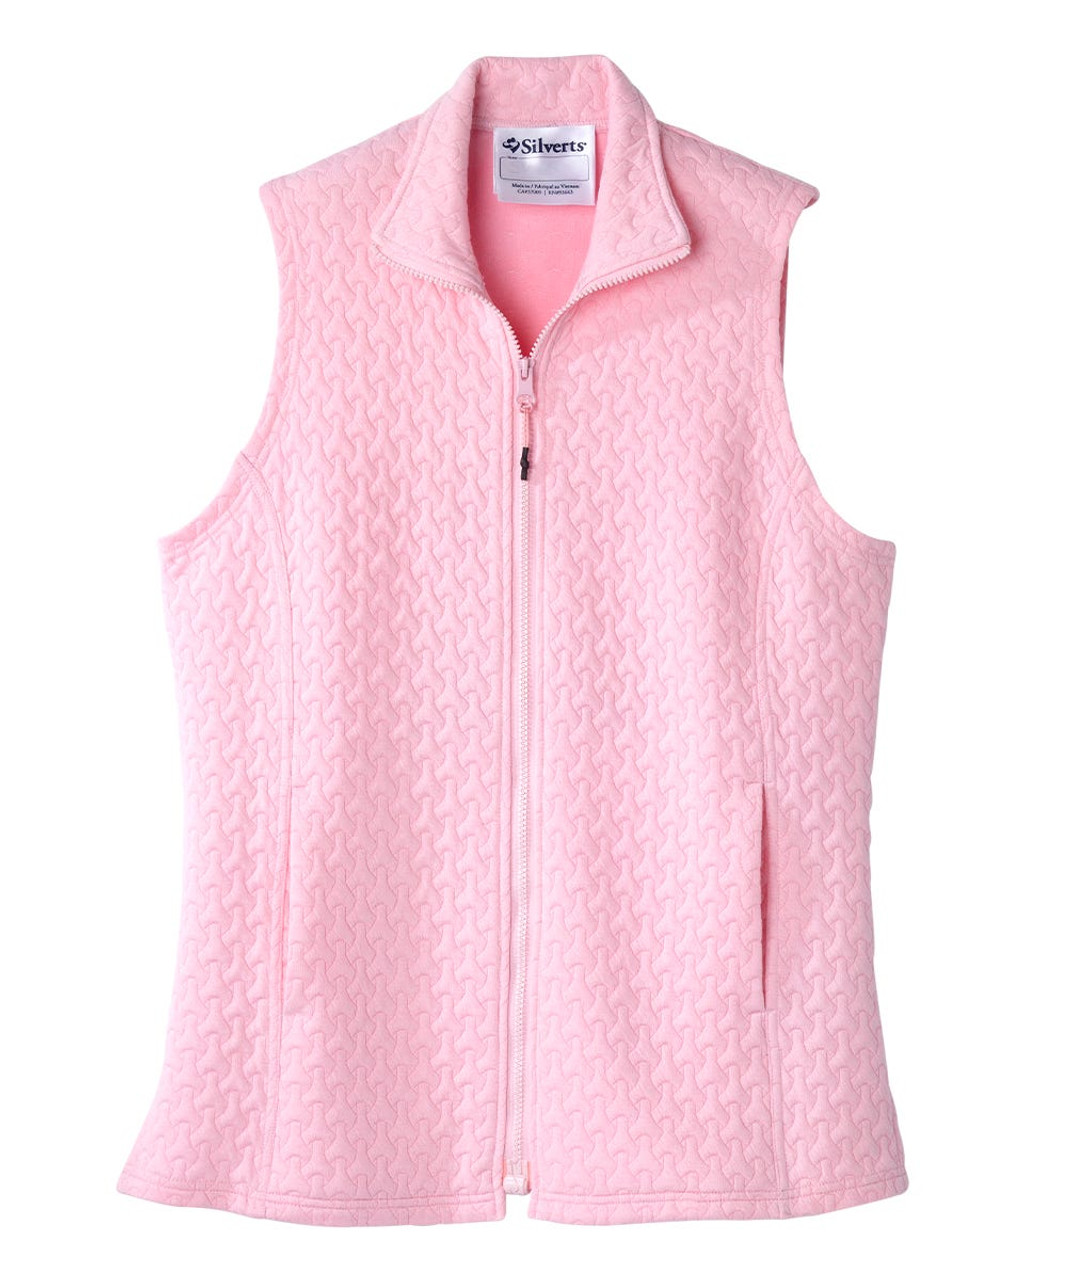 Silverts SV165 Senior Women's Adaptive Mag Zip Track Suit Vest Pink, Size=S, SV165-SV14-S